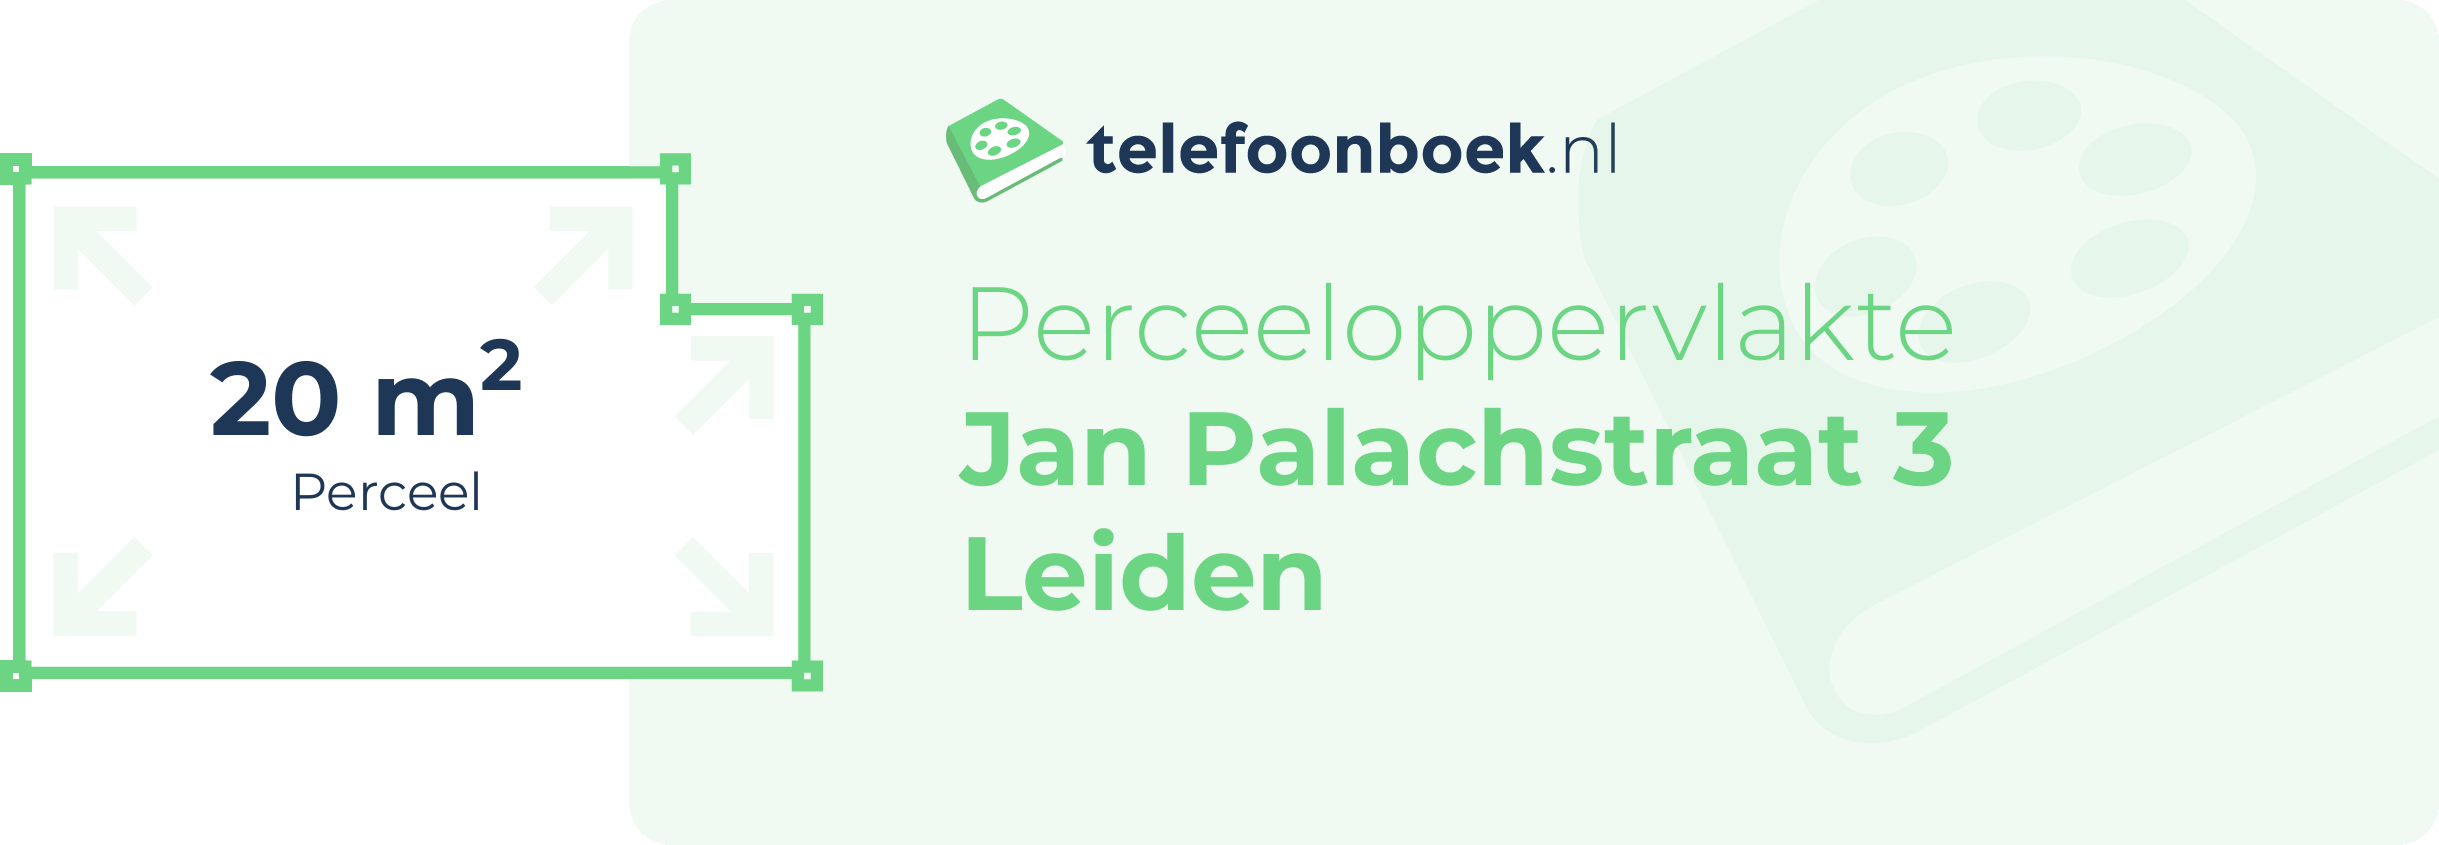 Perceeloppervlakte Jan Palachstraat 3 Leiden